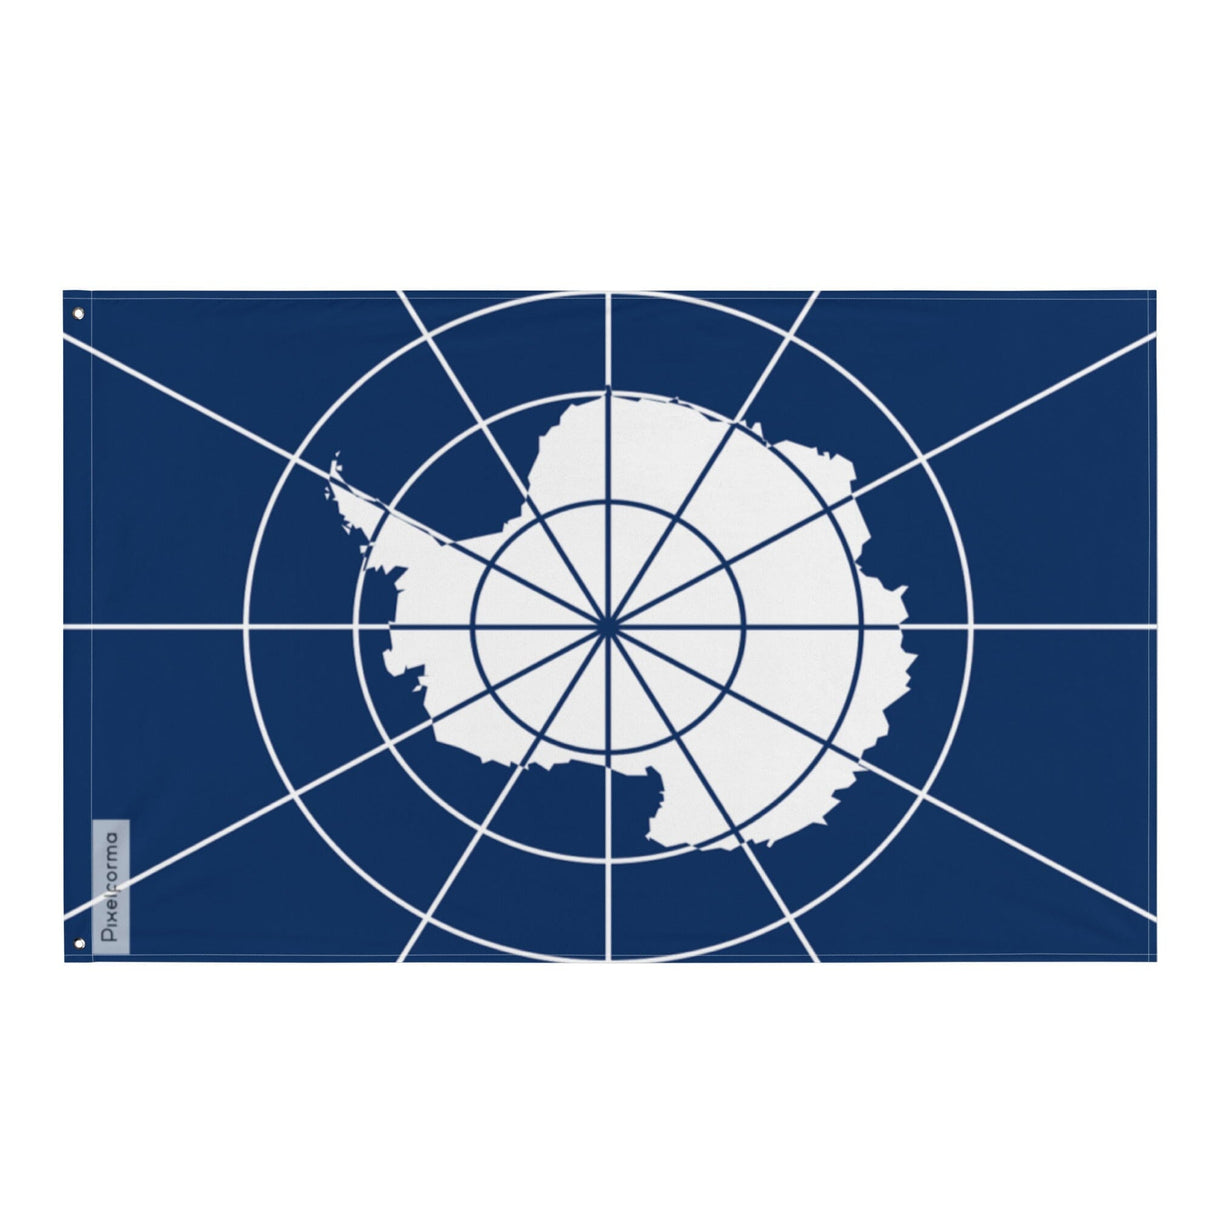 Antarctic Treaty Flag in Multiple Sizes 100% Polyester Print with Double Hem - Pixelforma